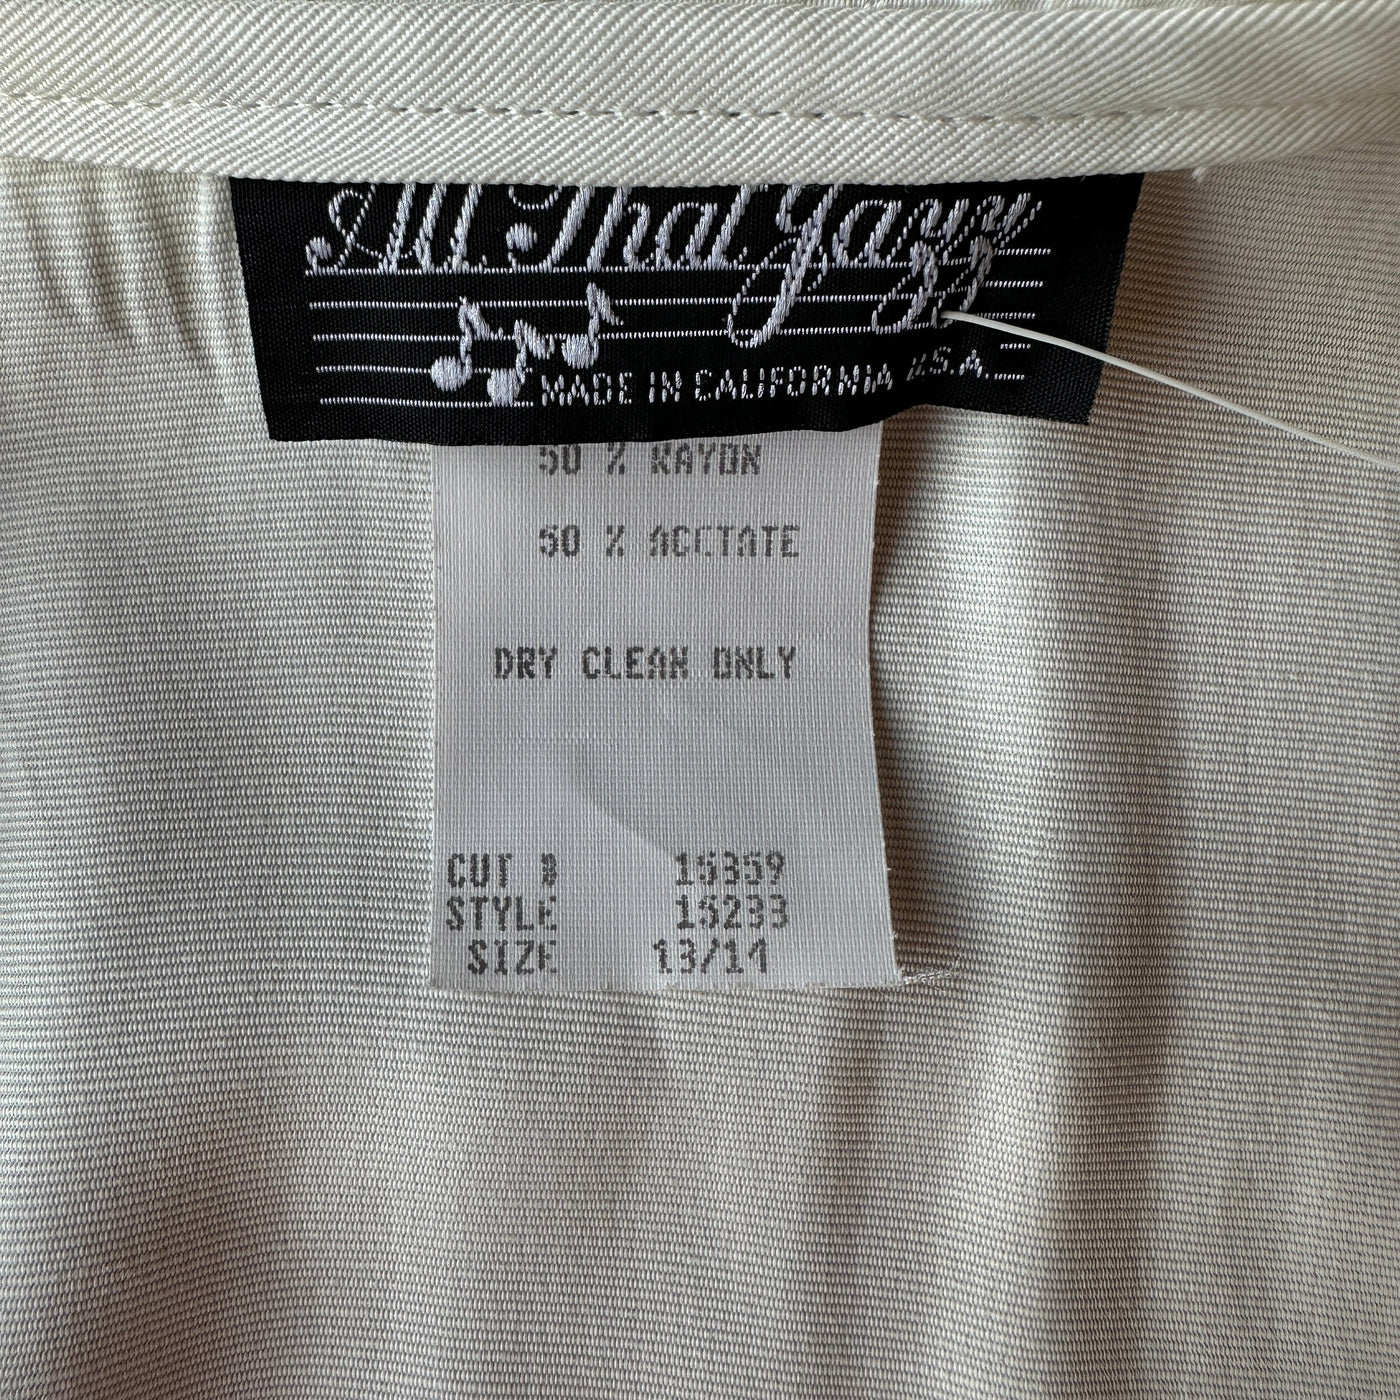 80s White/Cream “All That Jazz, Made in California USA” Shirt Dress